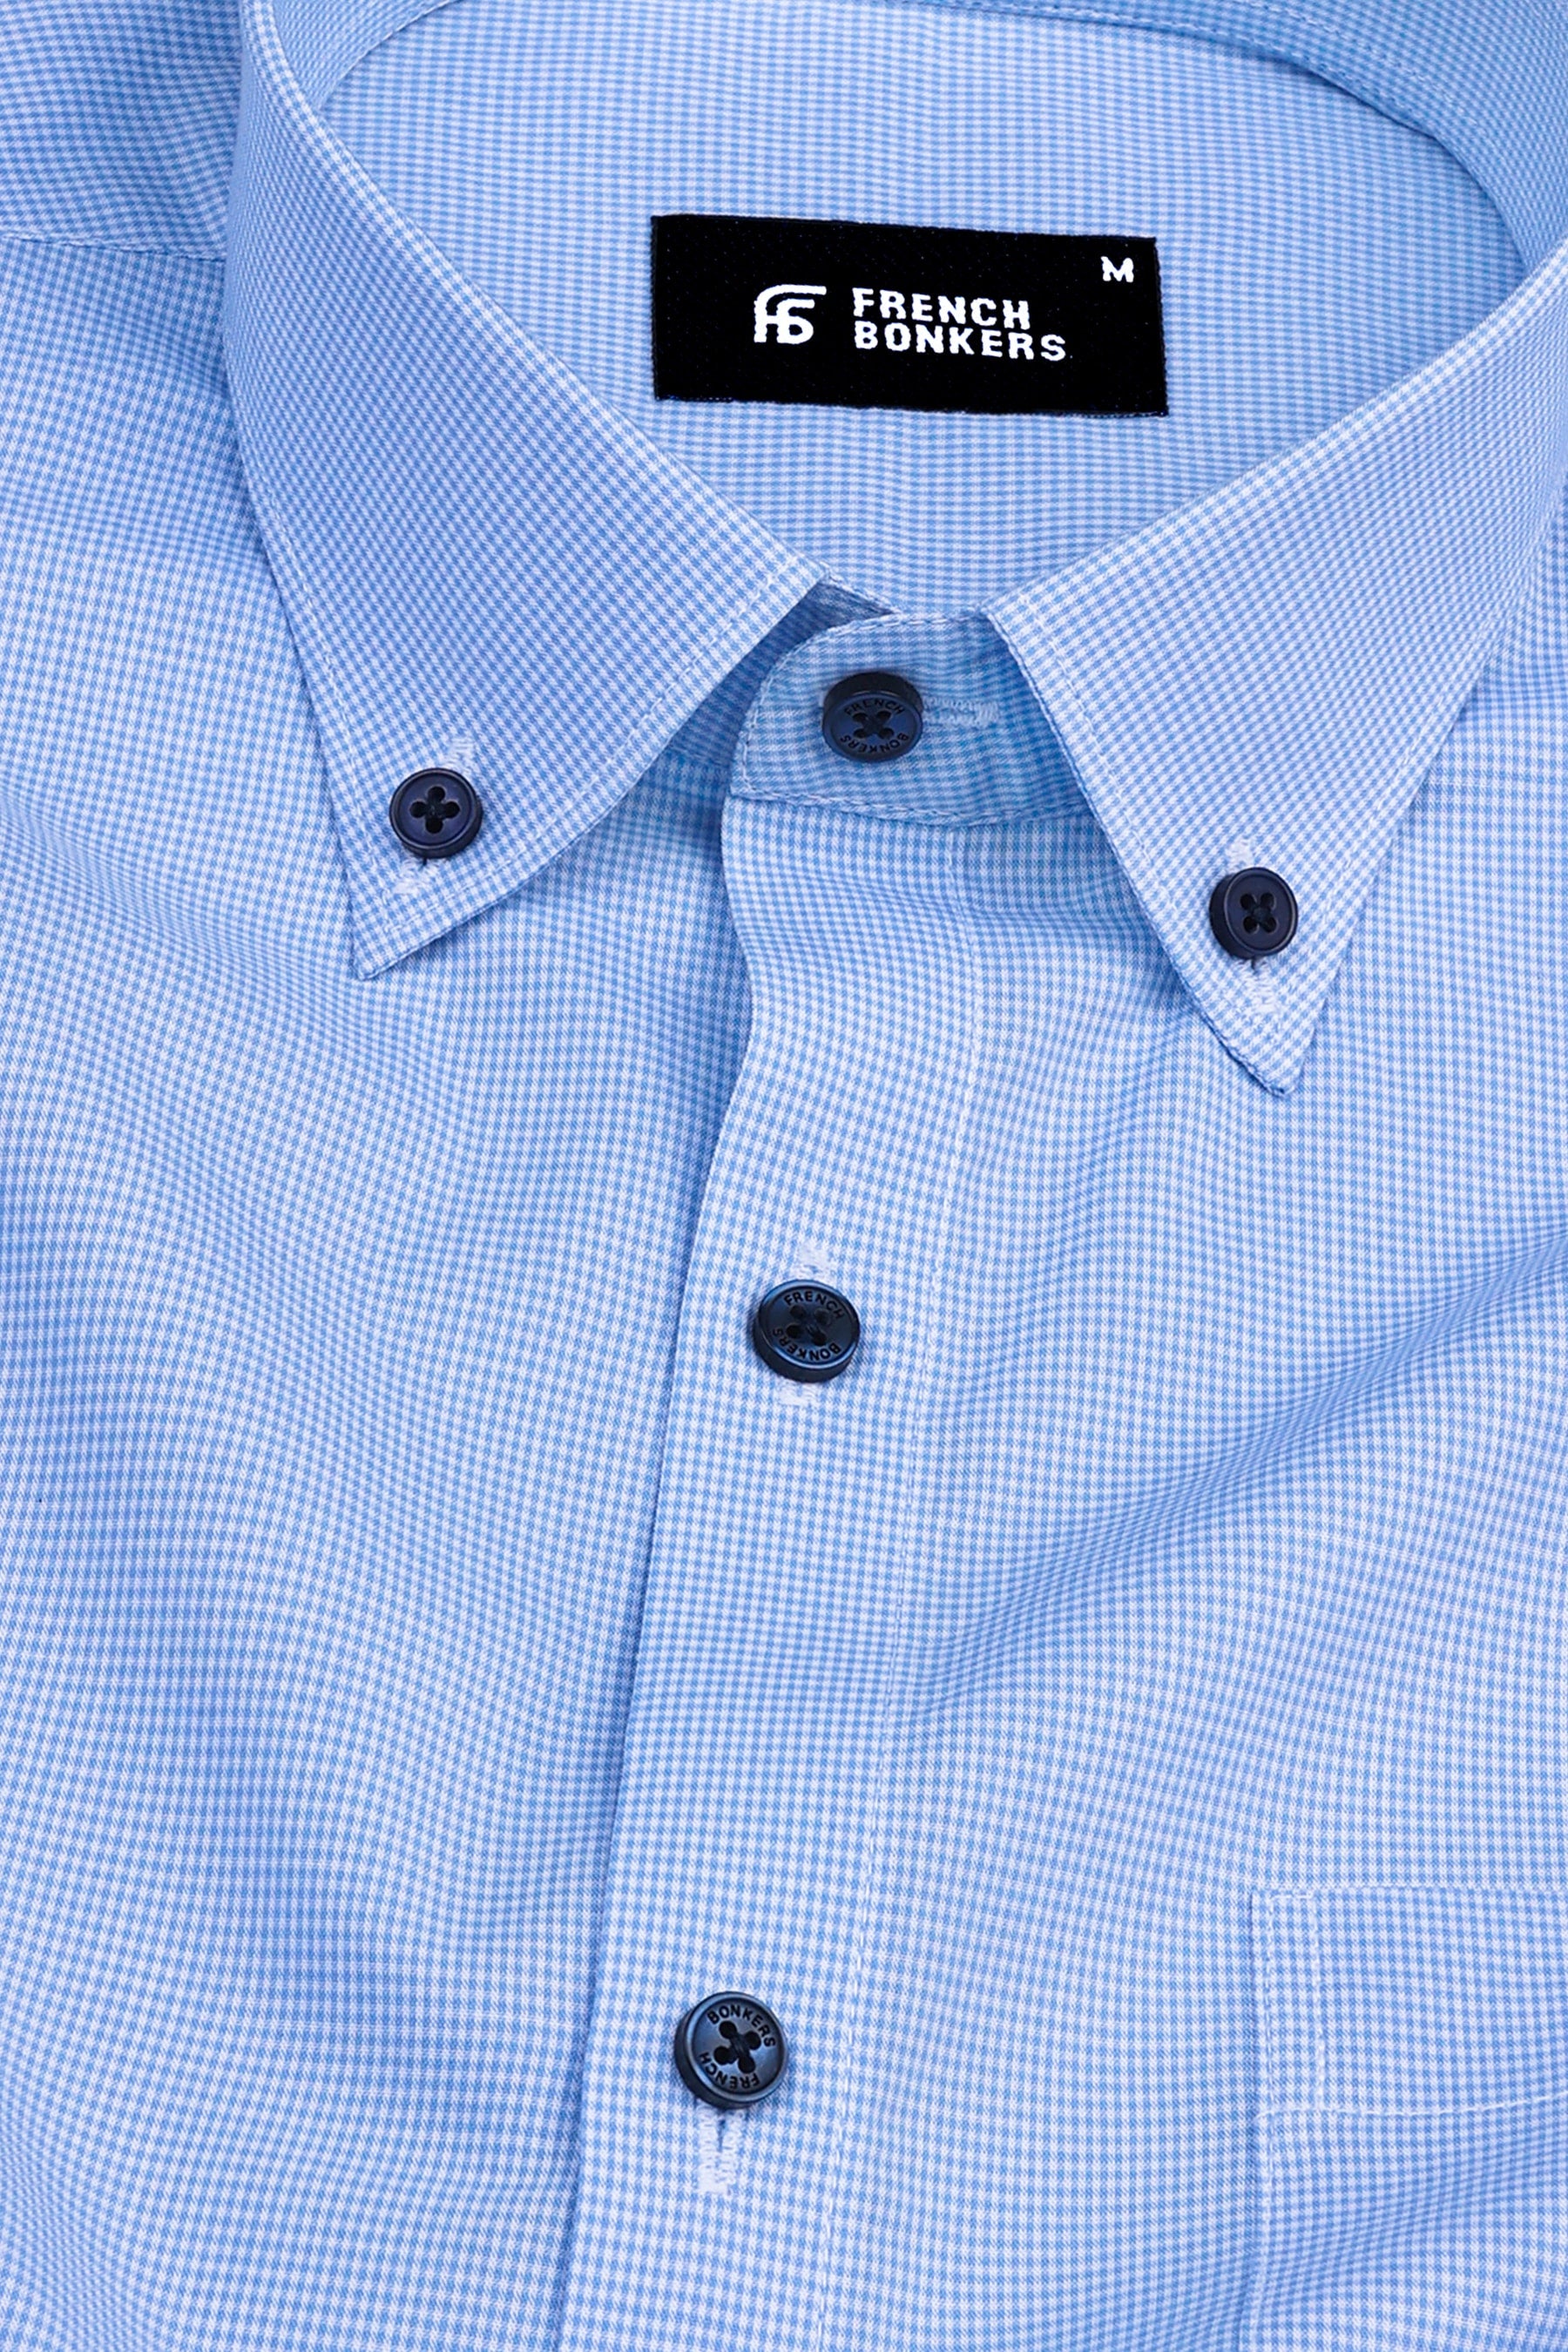 Powder blue with white mini micro check  cotton shirt